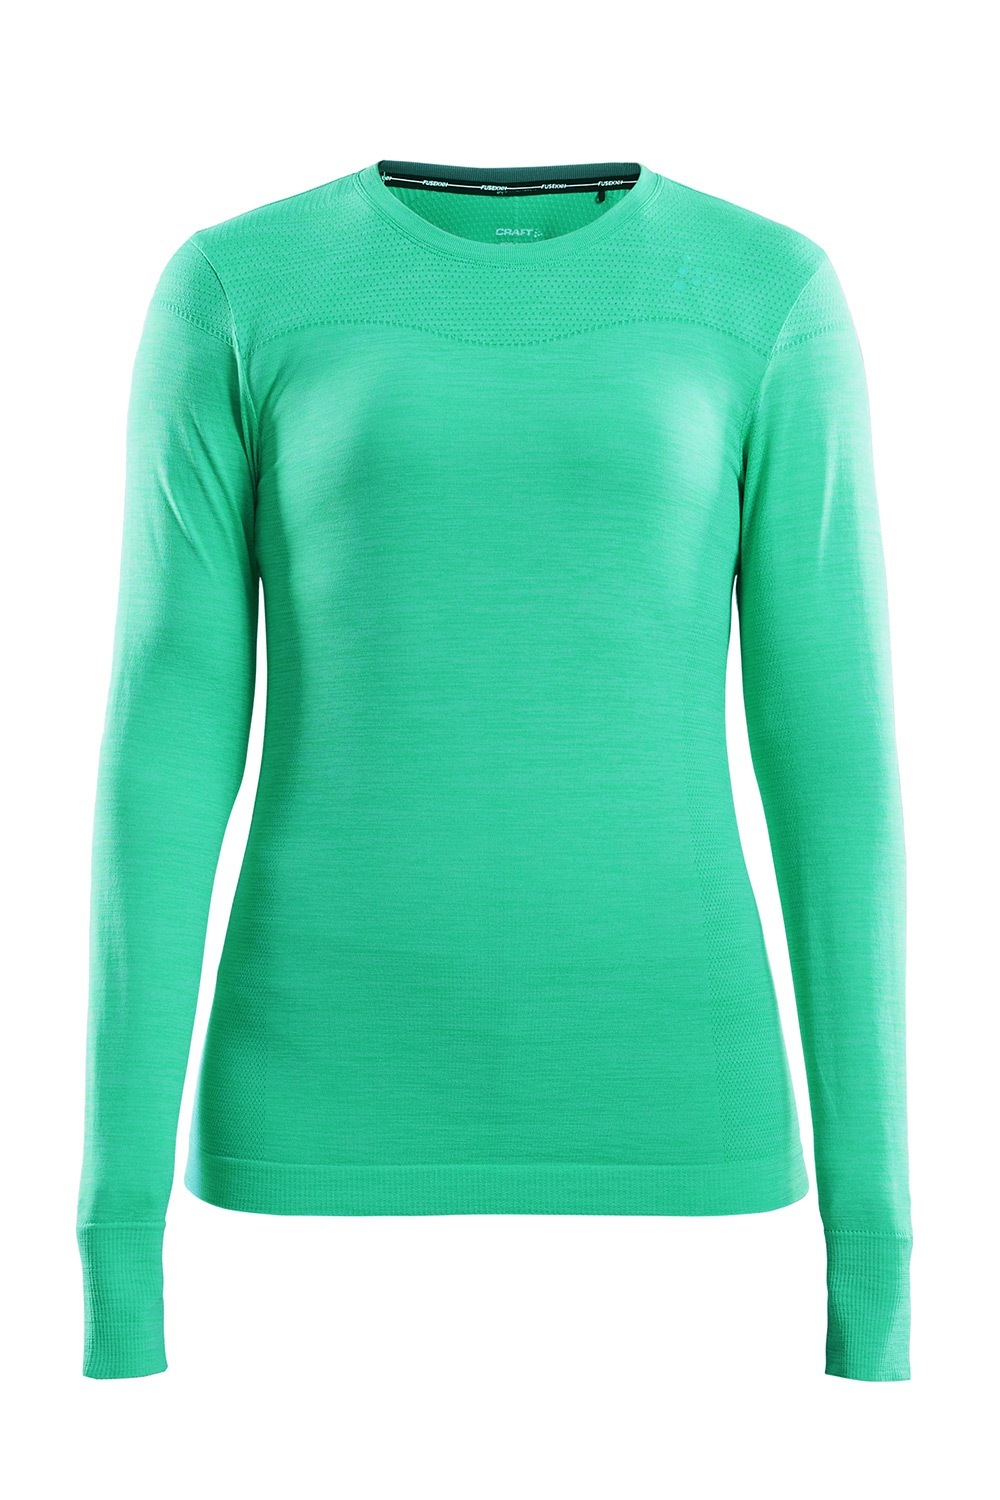 Craft Fuseknit Comfort női póló, világos zöld fotója